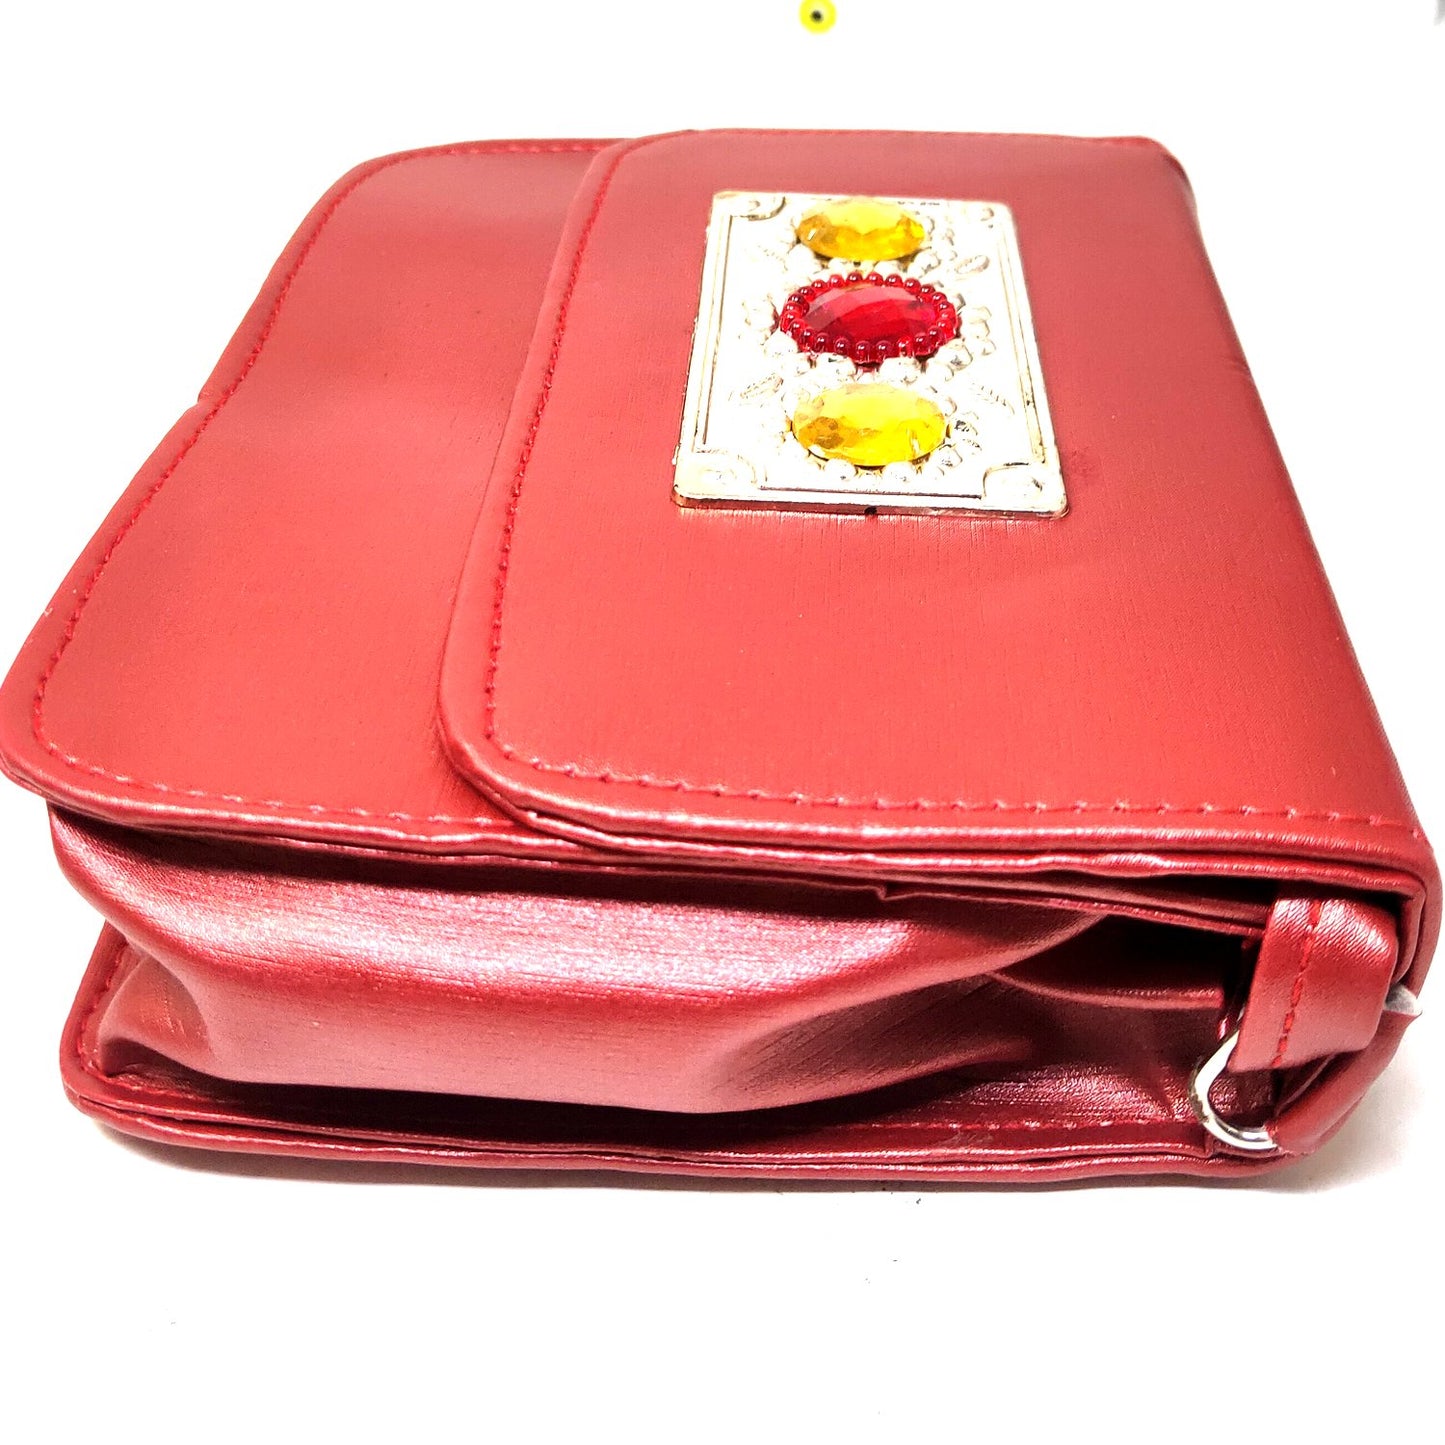 Anokhi Ada PU Leather Purse/Sling Bag /Handbag for Girls and Women (YB-74)